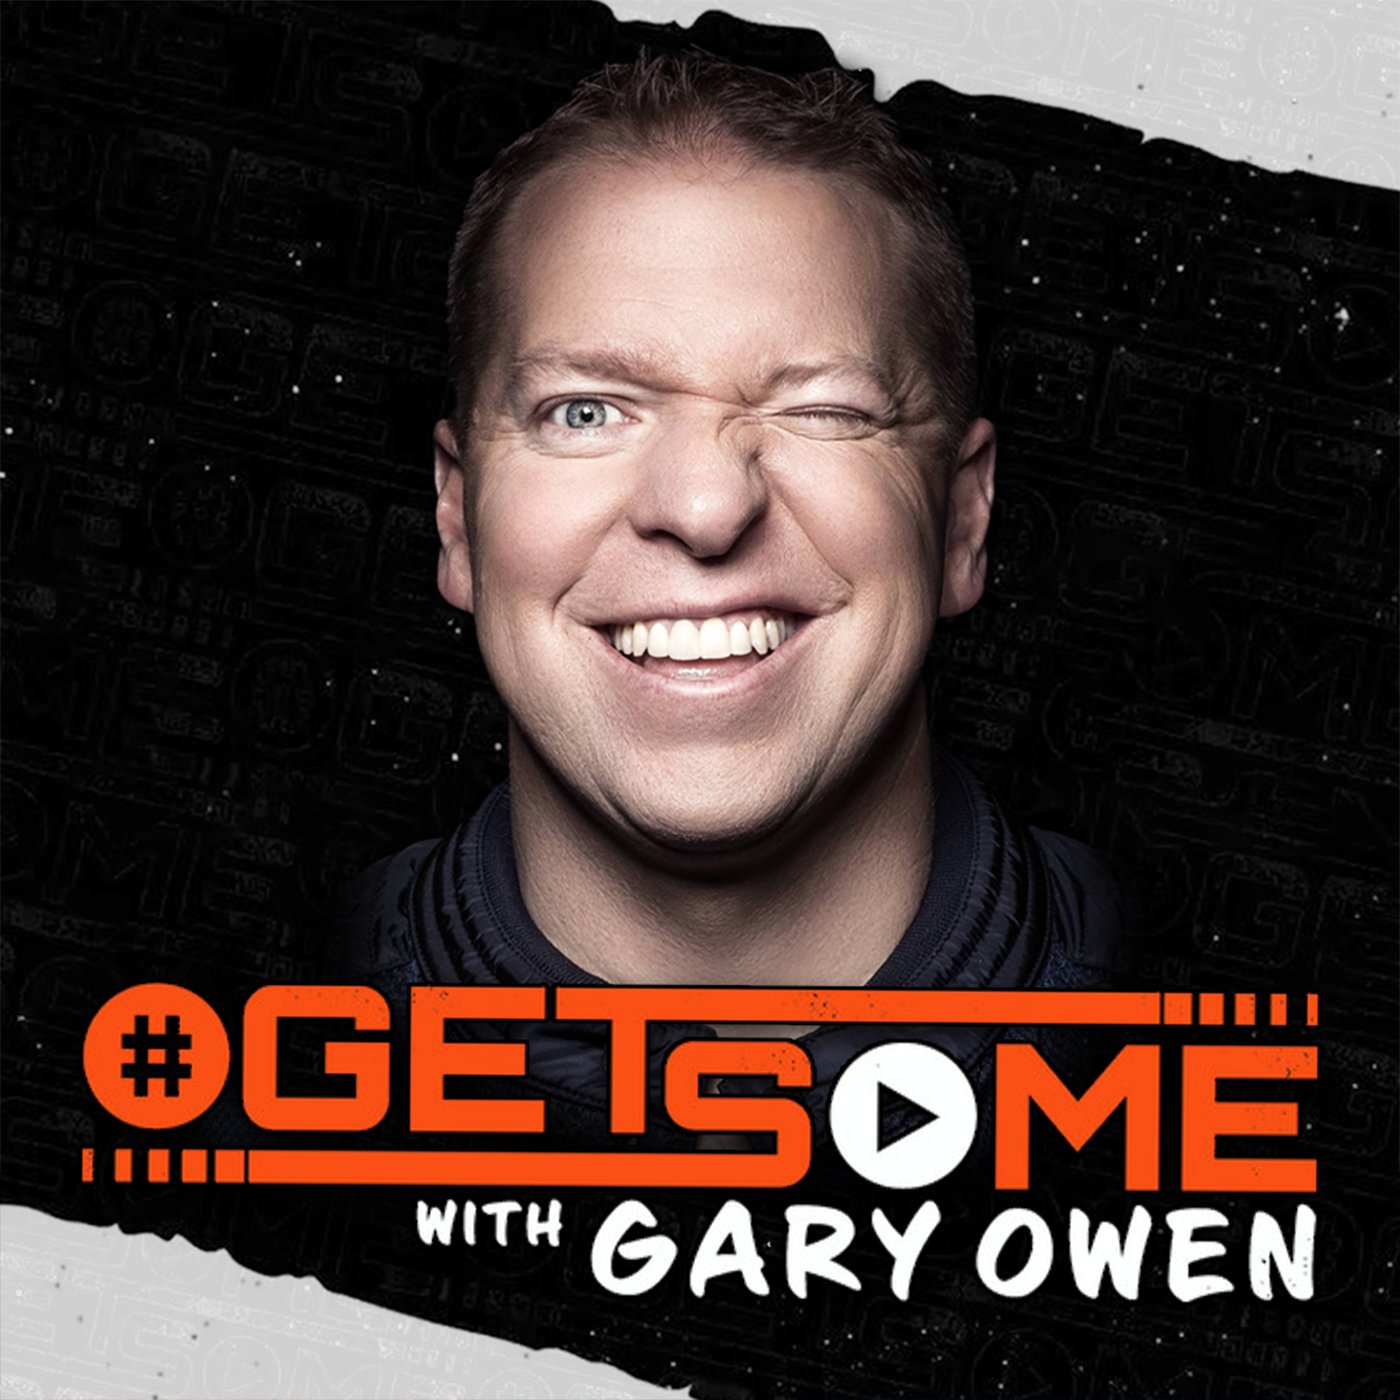 Michael Jai White | #GetSome Ep. 132 with Gary Owen